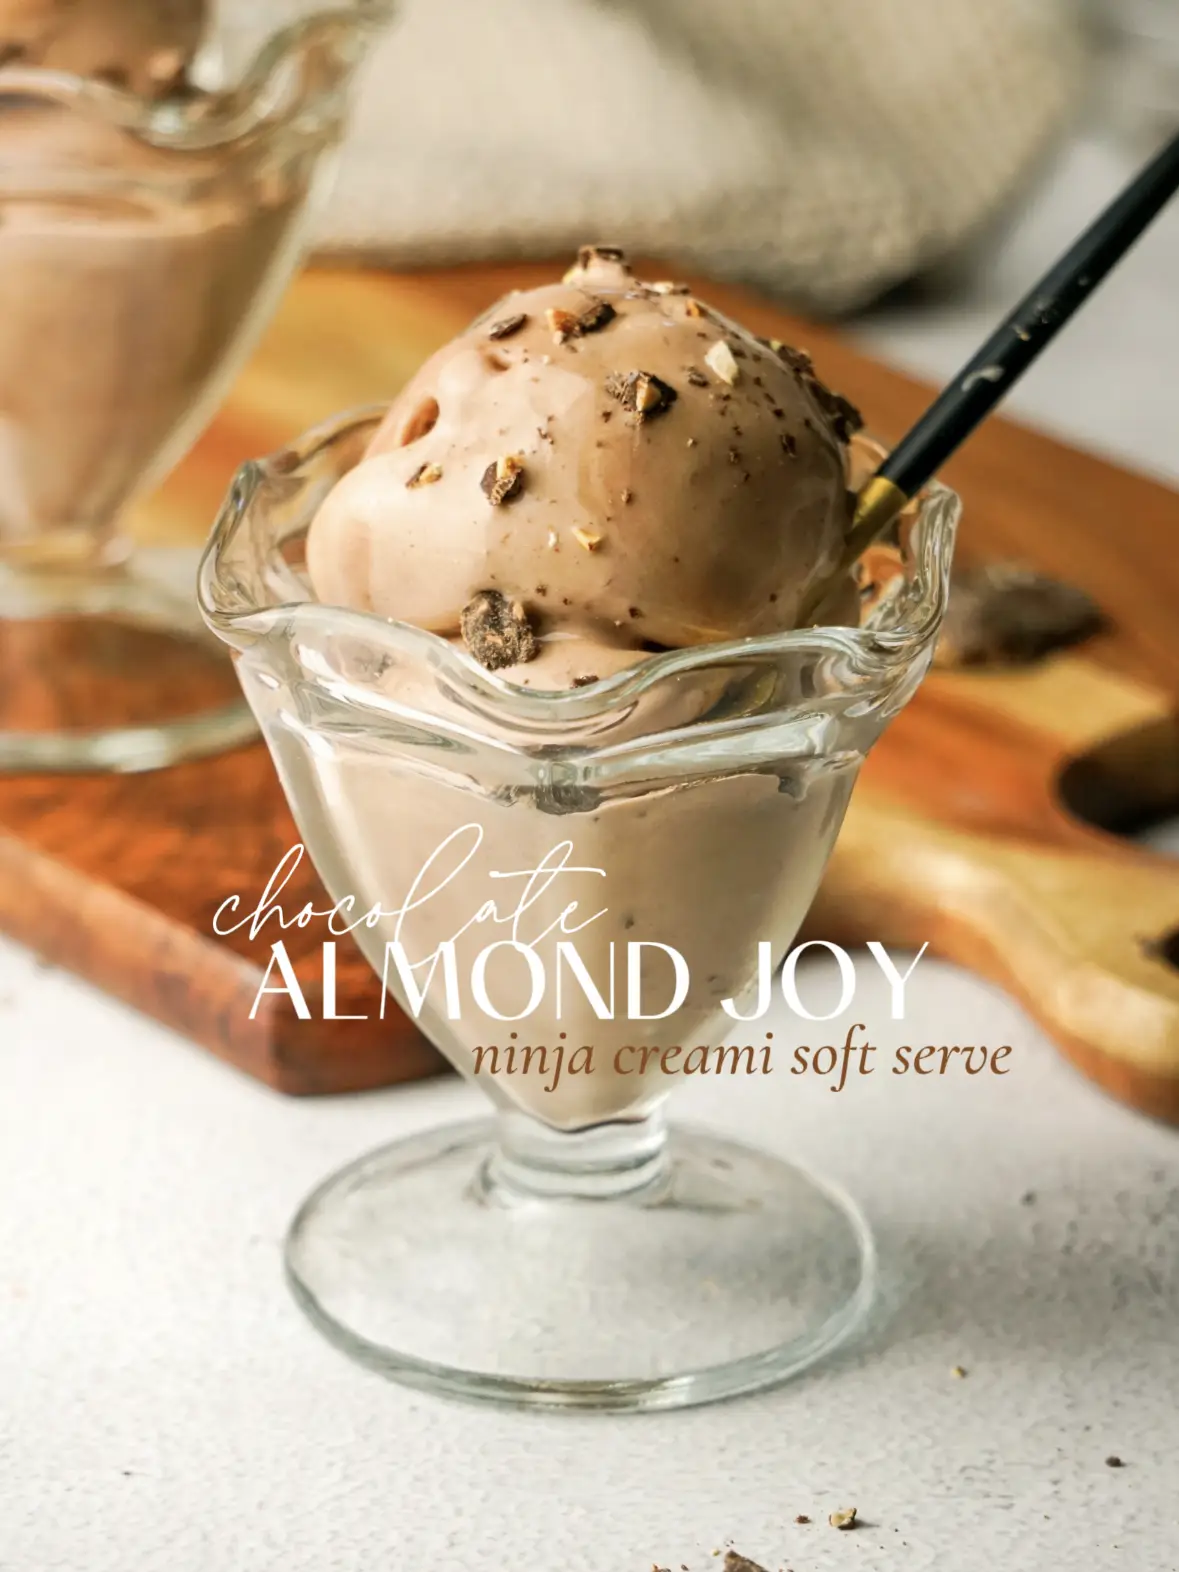 Ninja Creami Almond Joy Ice Cream, Recipe